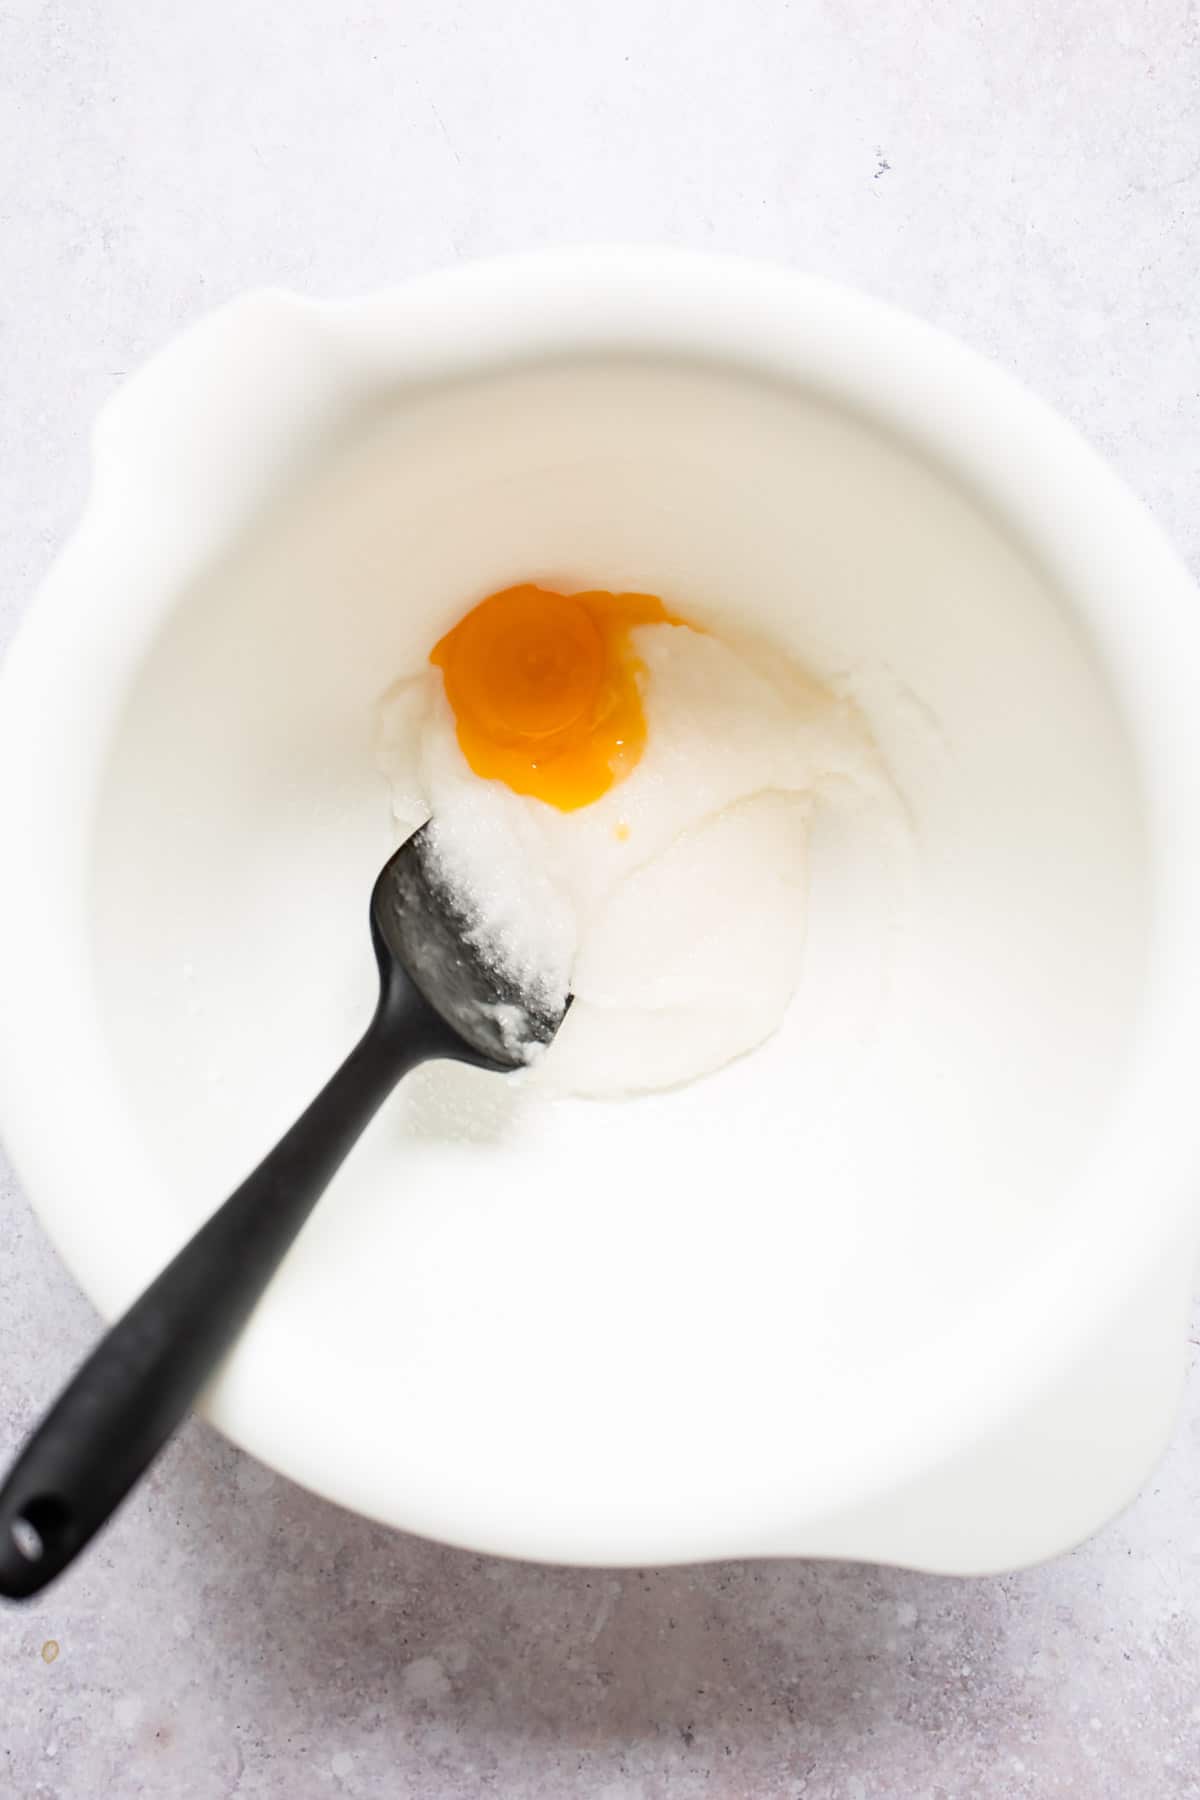 Egg yolk in sugar and oil mixture. 